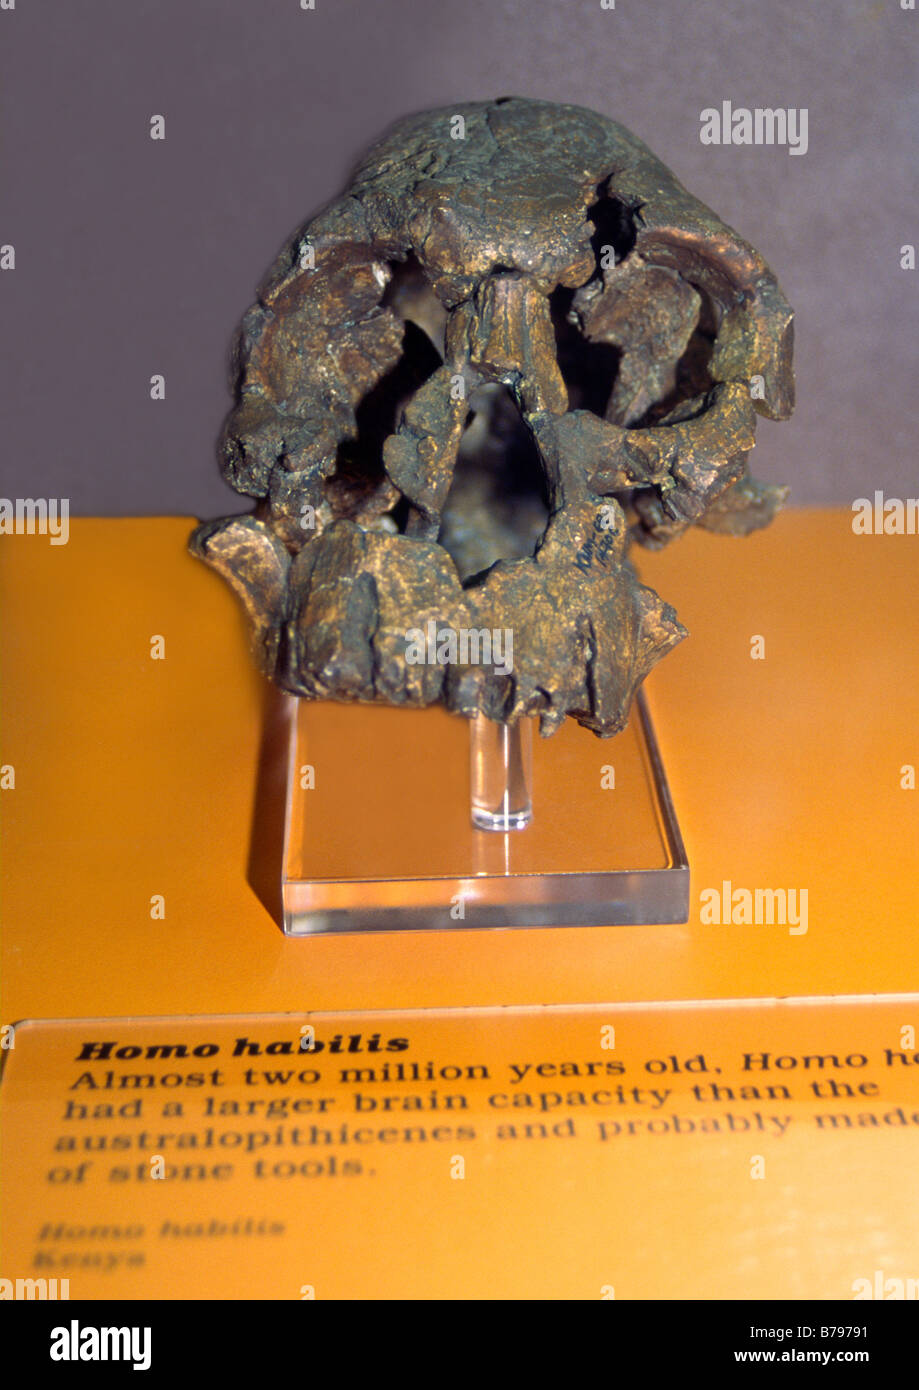 homo habilis skull Stock Photo: 21716269 - Alamy